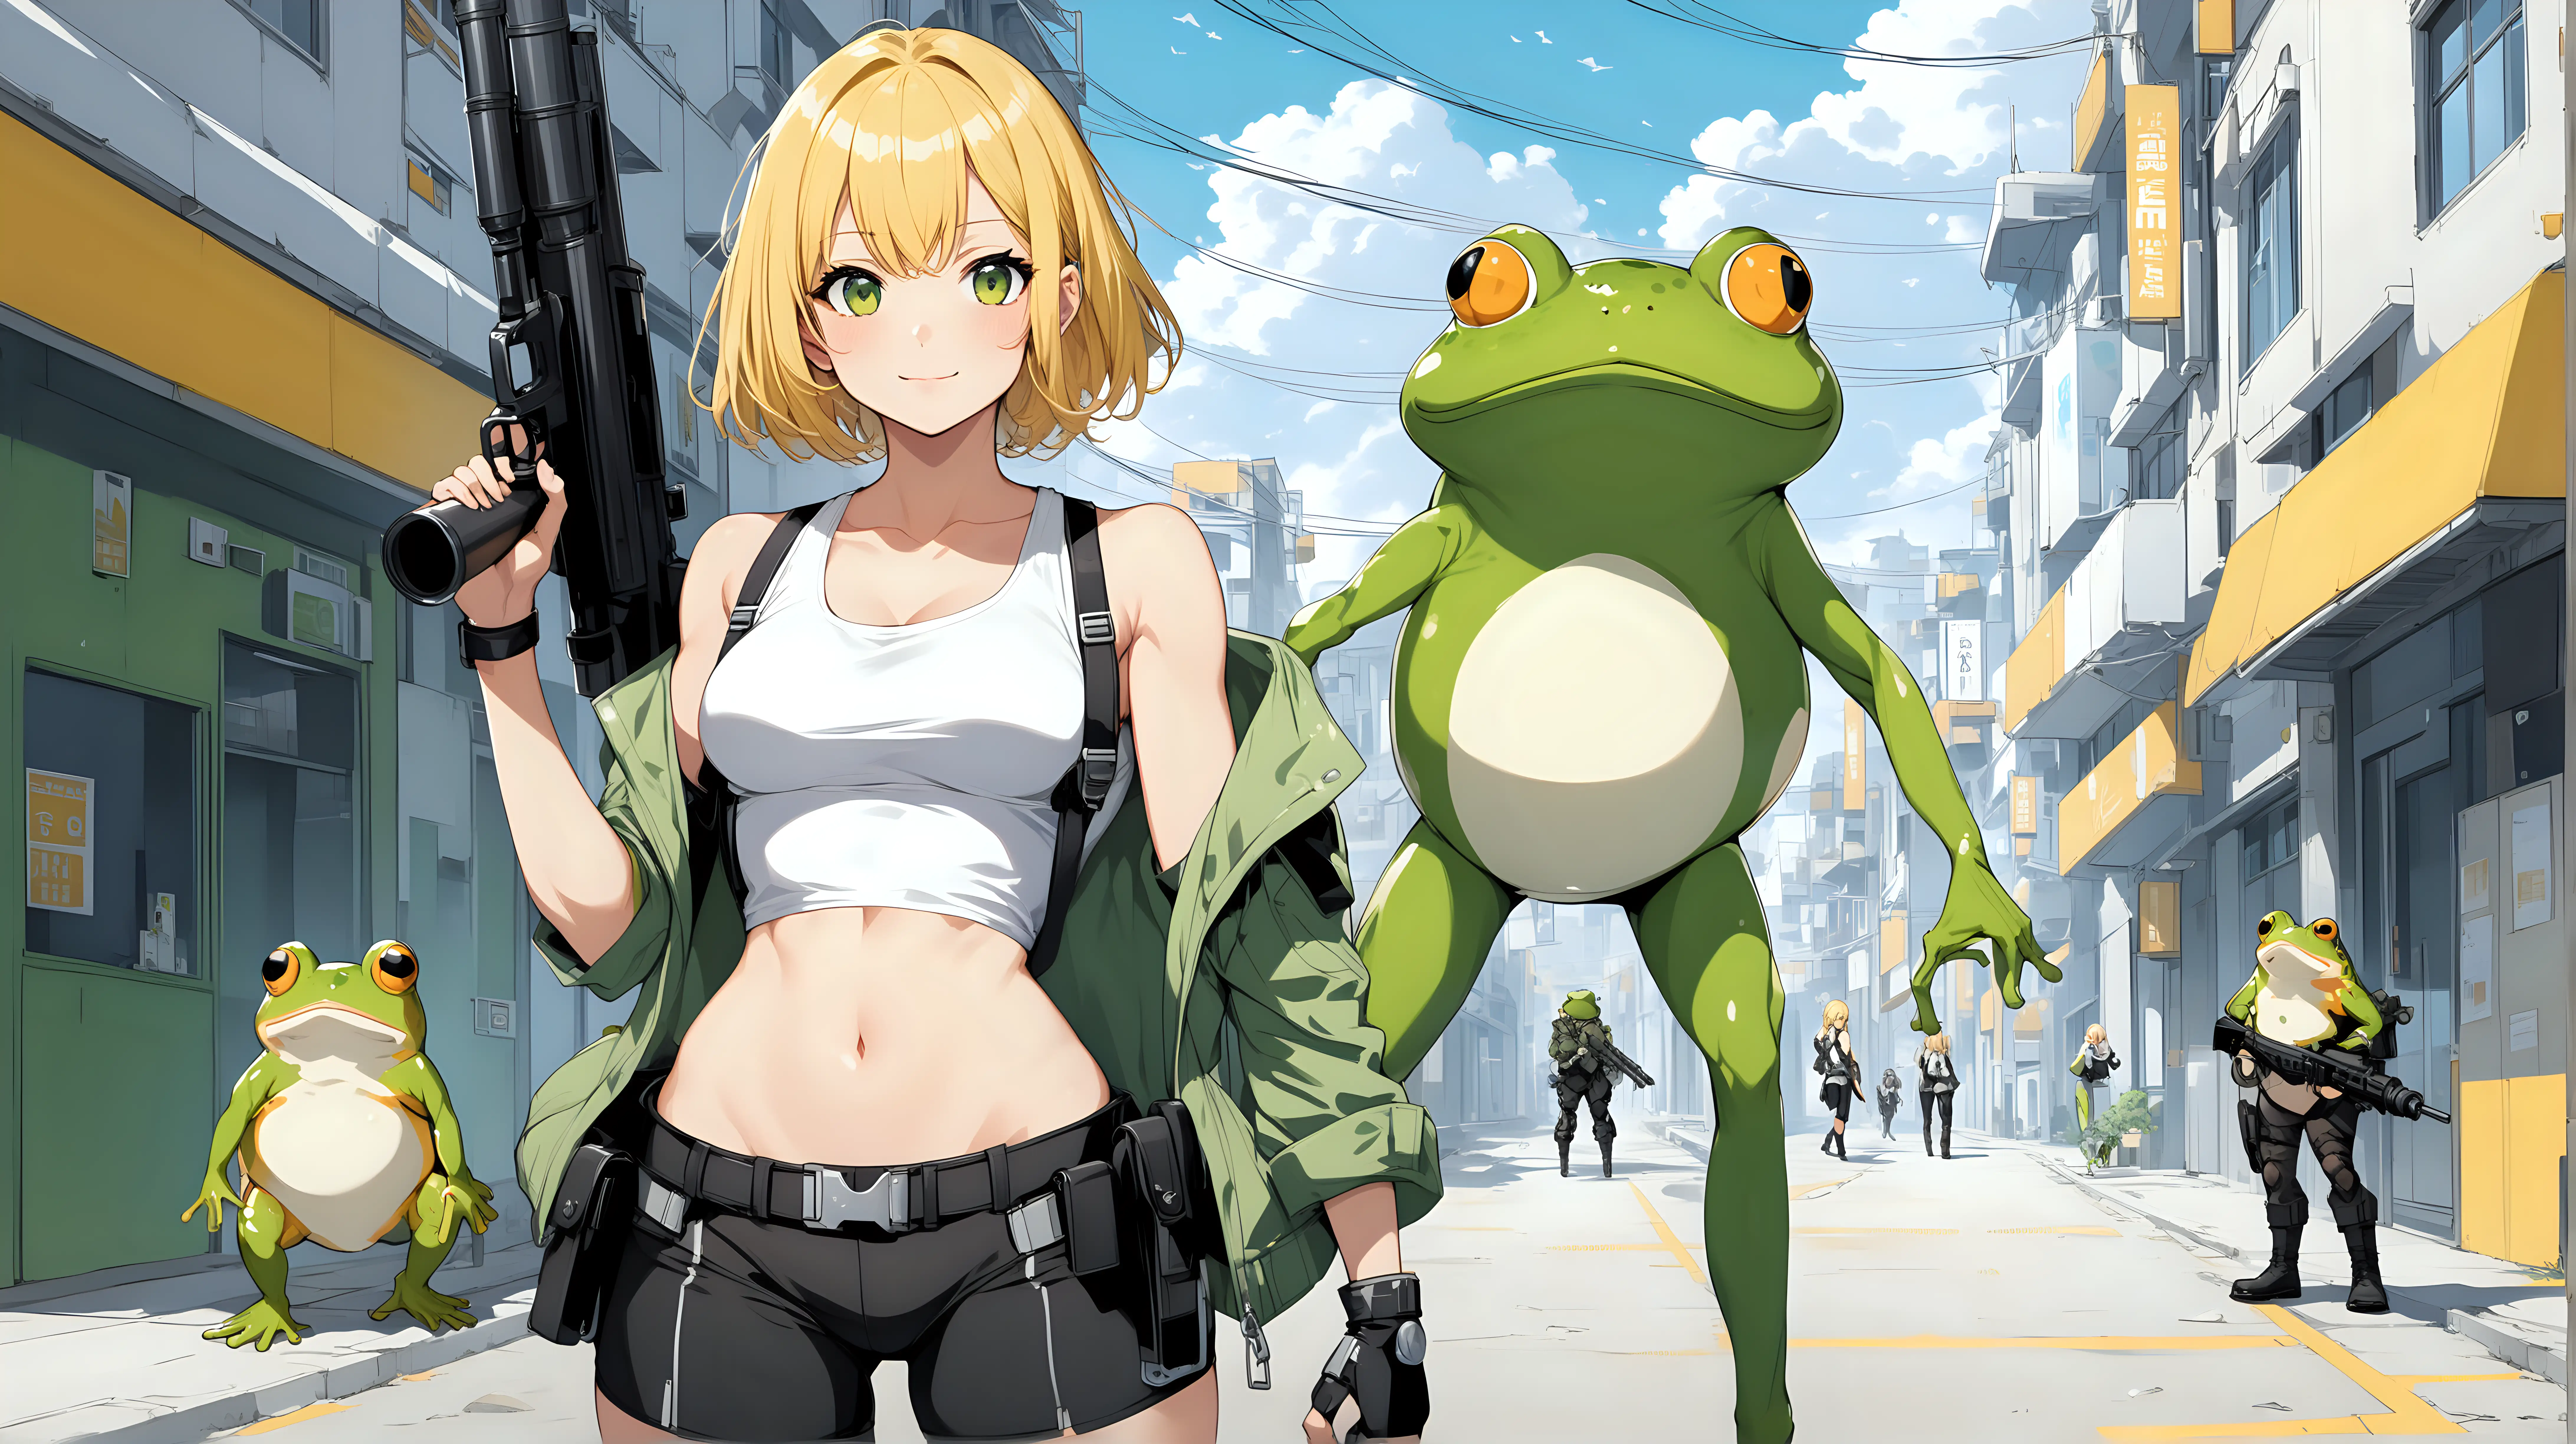 Futuristic Heroine and Frog with Bazooka in Minimalist Cityscape